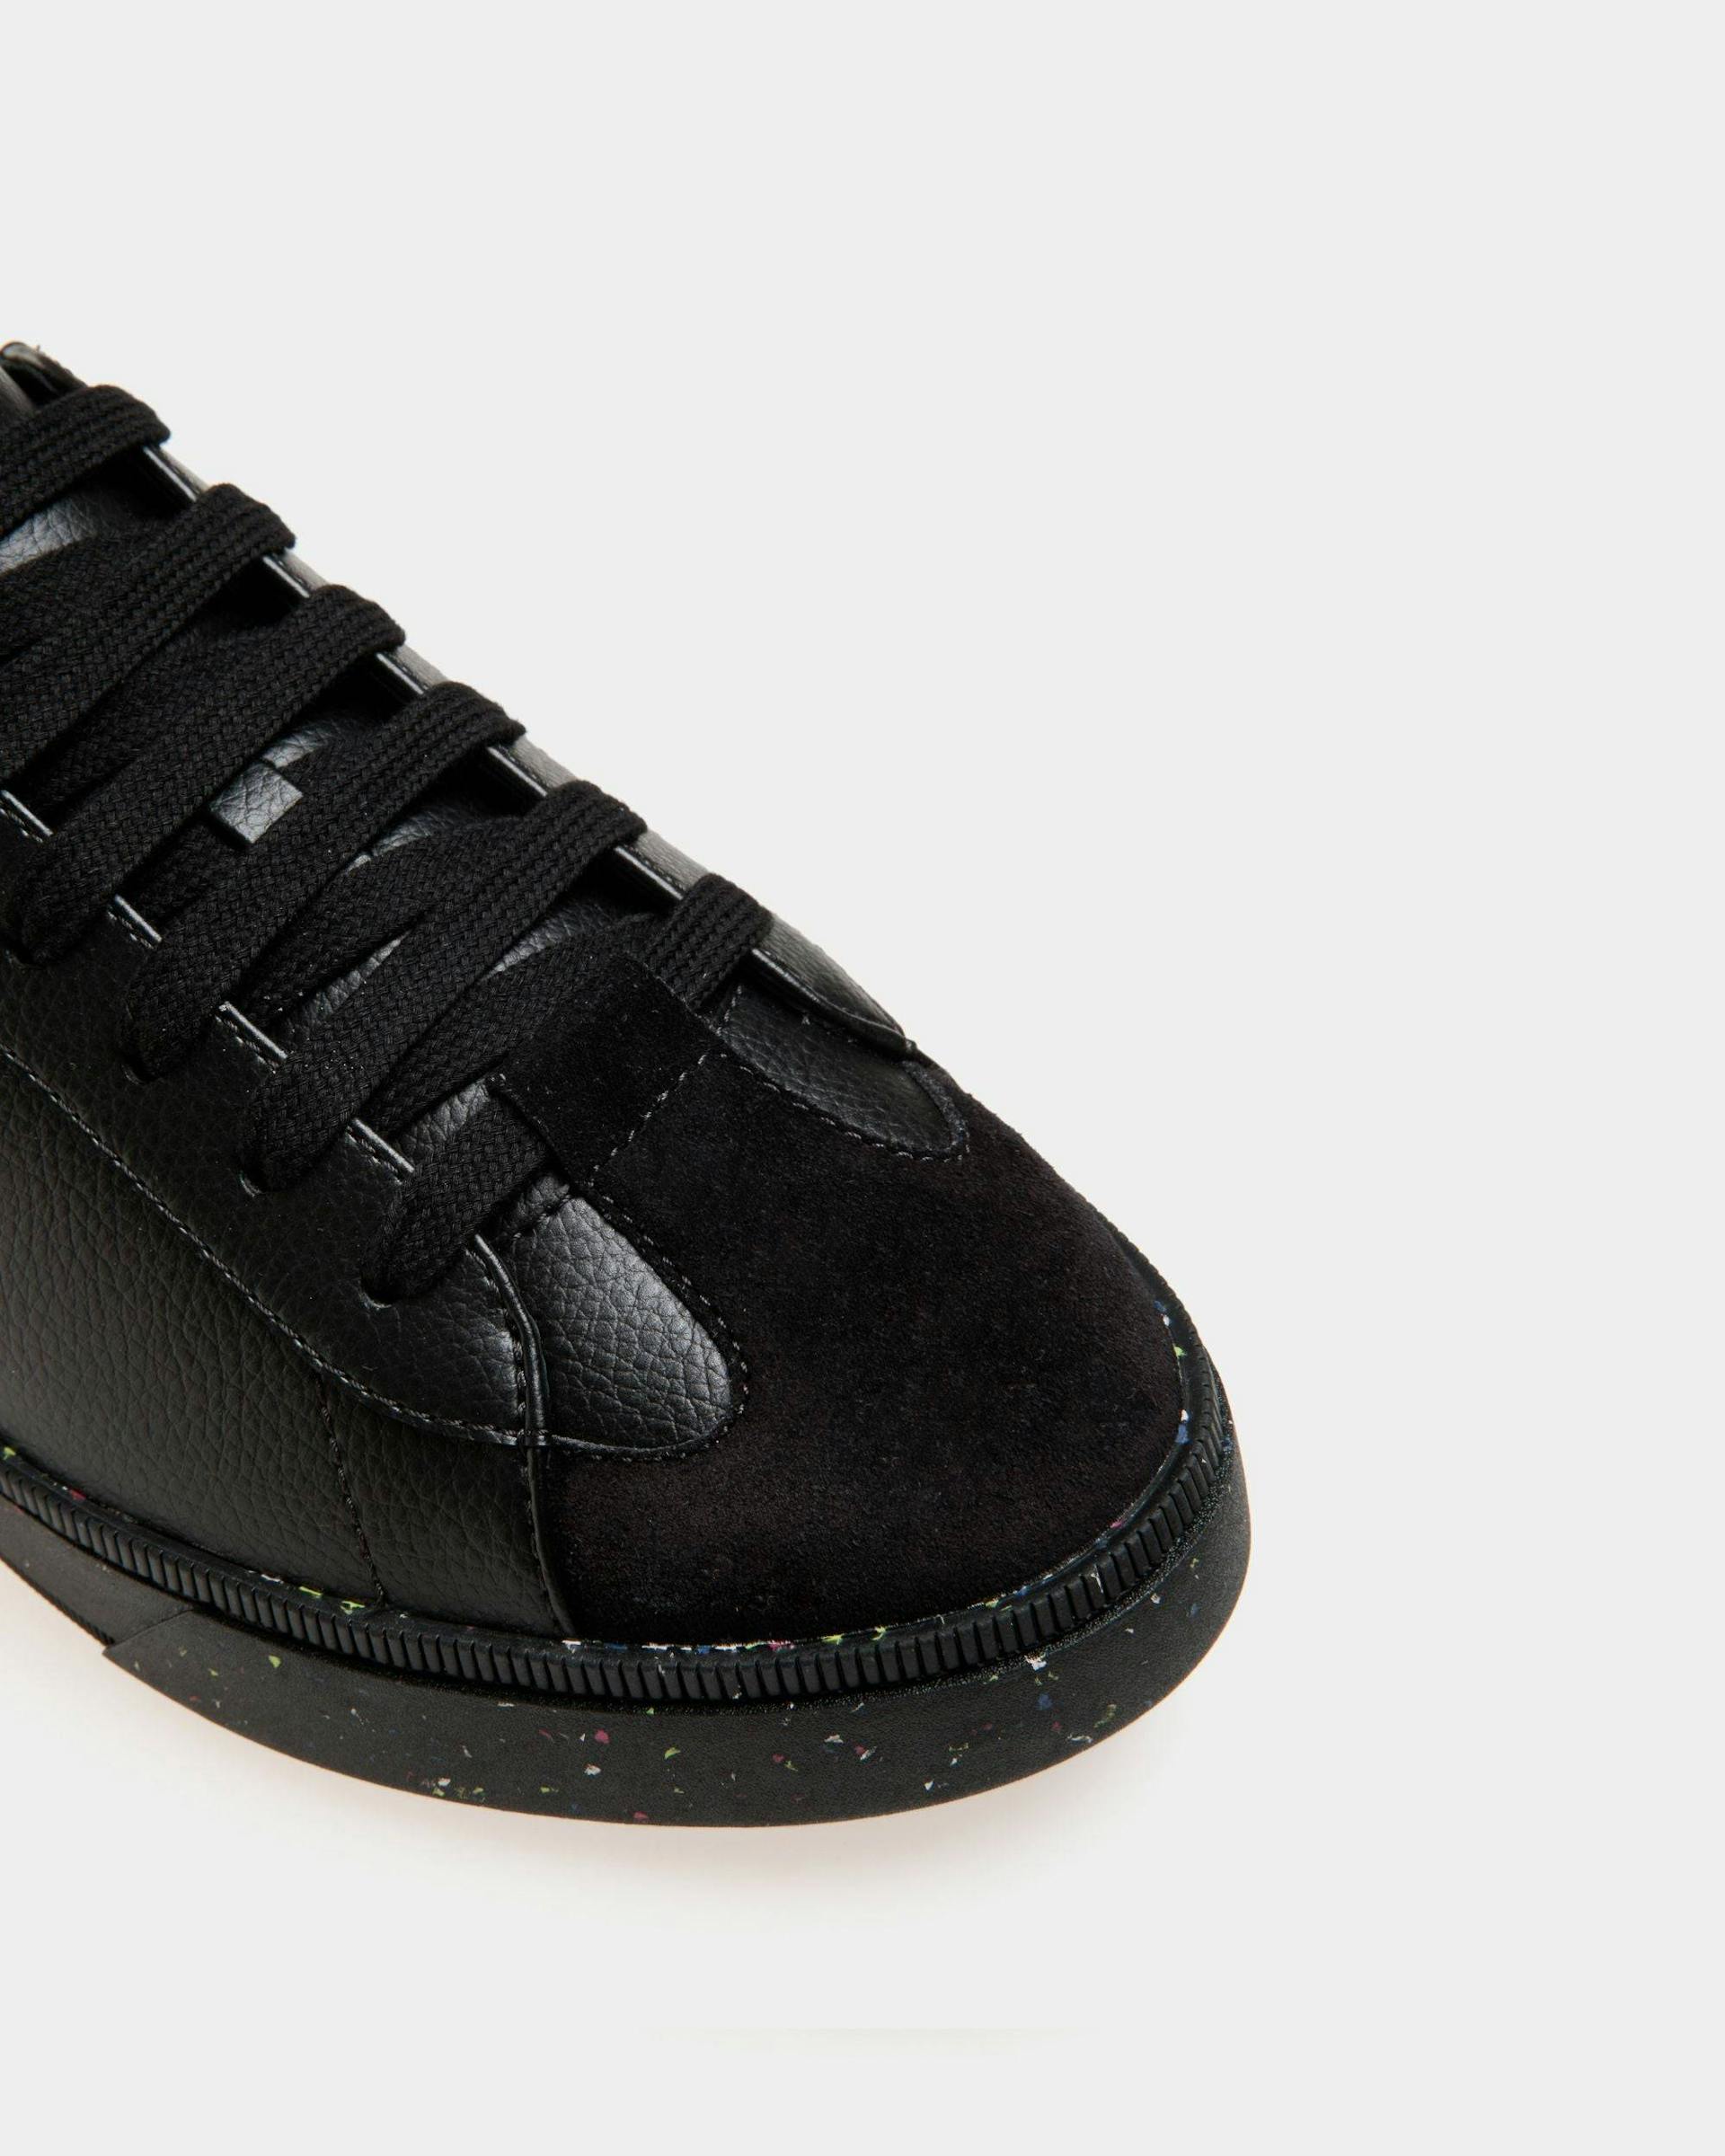 Men's Raise Sneaker in Faux Leather | Bally | Still Life Detail